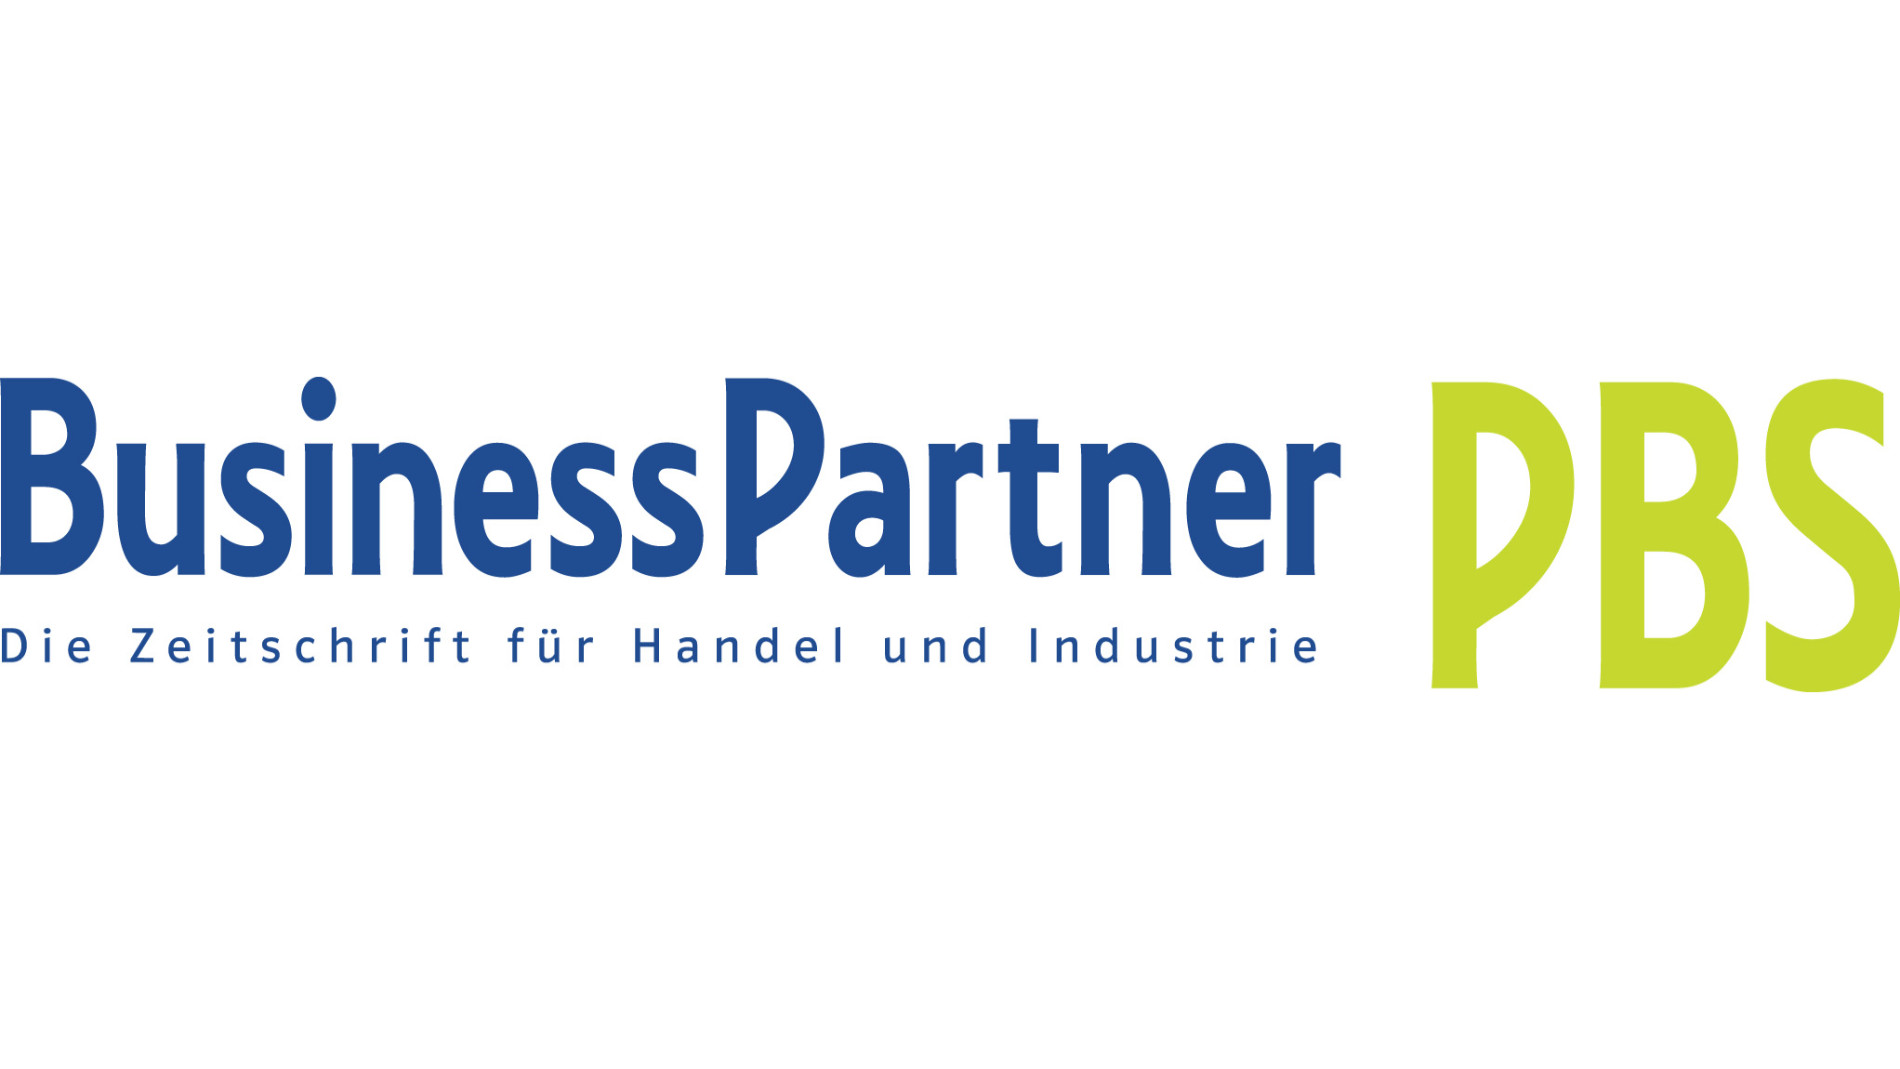 Business Partner PBS Logo